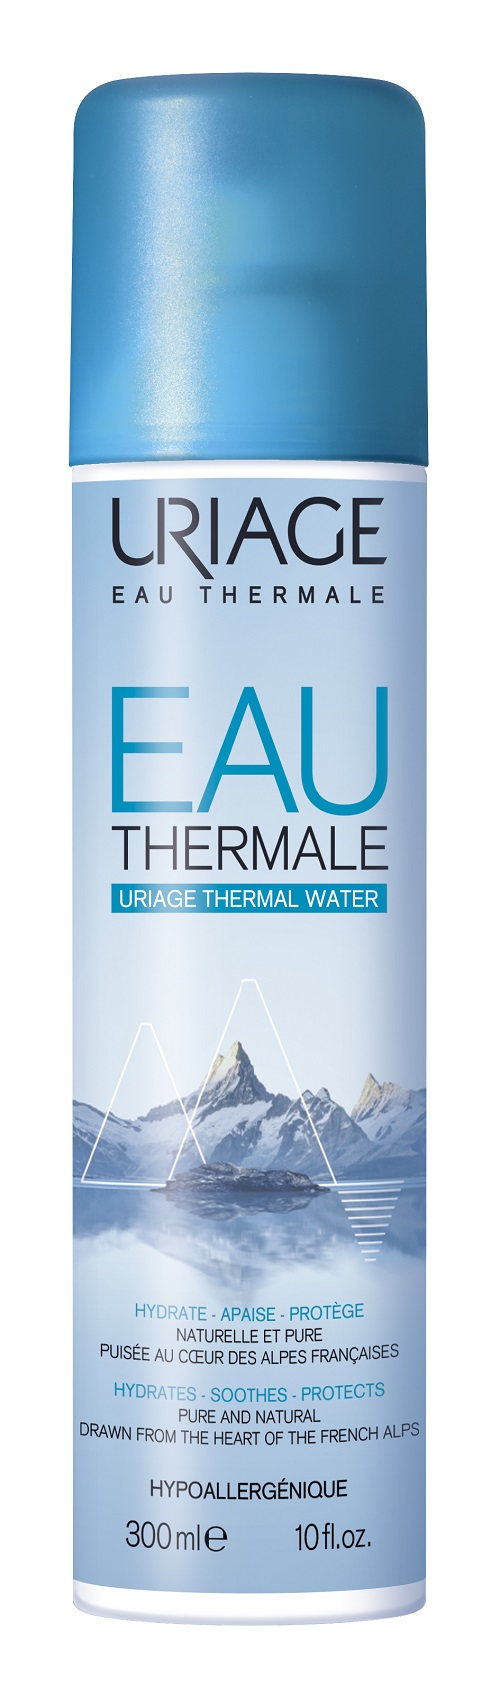 URIAGE Eau Thermale D'Uriage termálvíz spray 300 ml